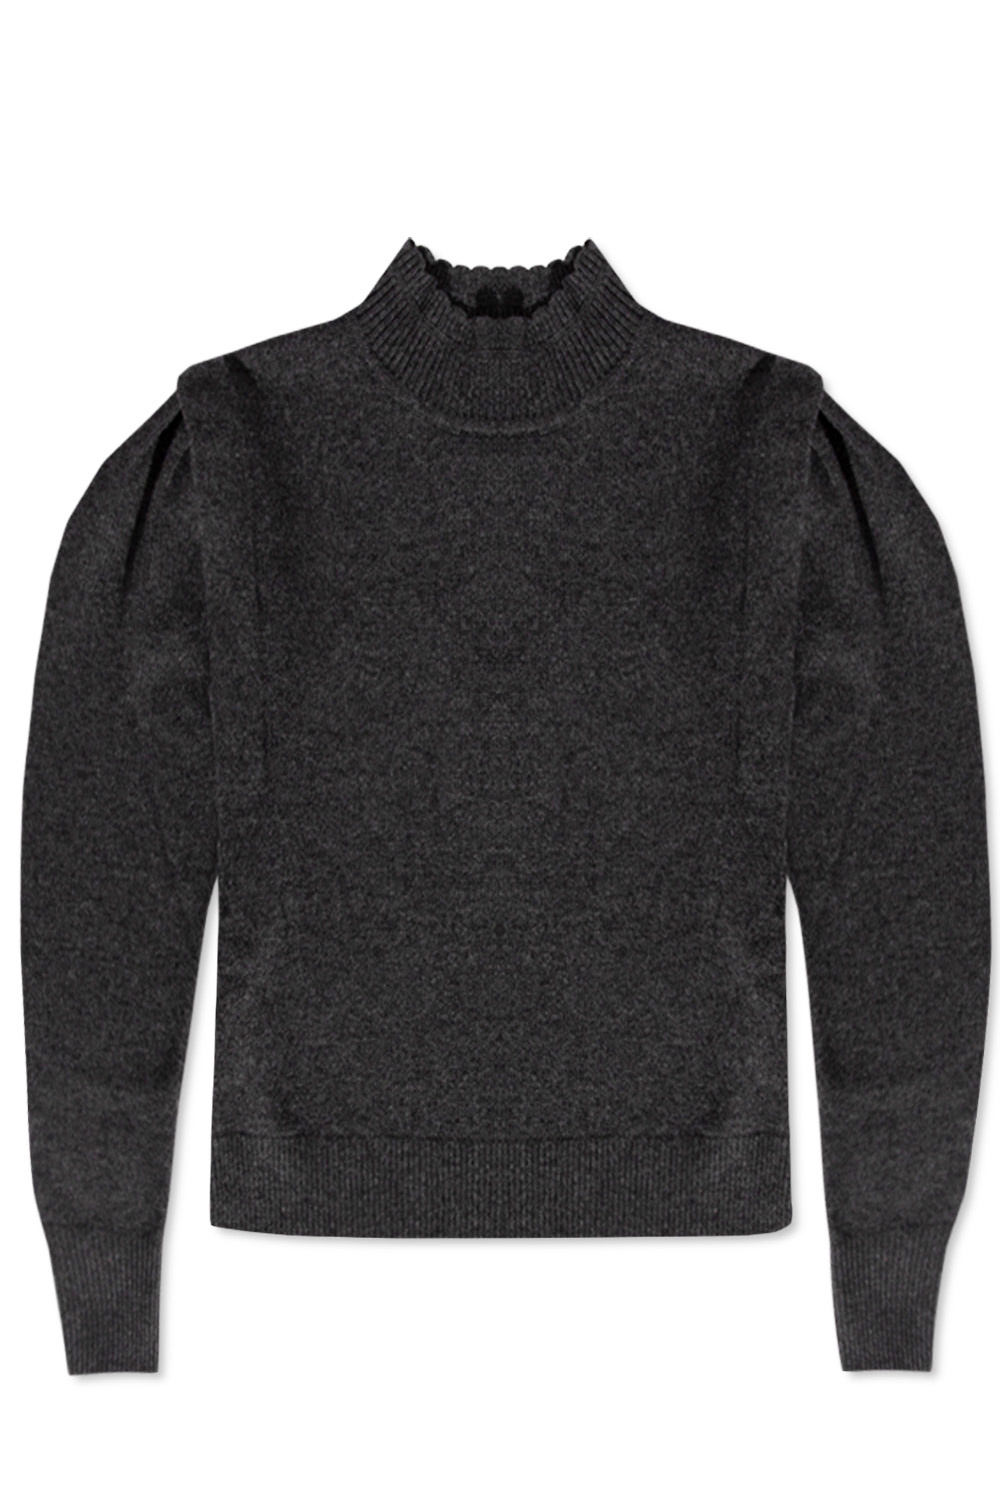 Louis Vuitton Felted Wool High Neck Knit Mini Dress - Vitkac shop online